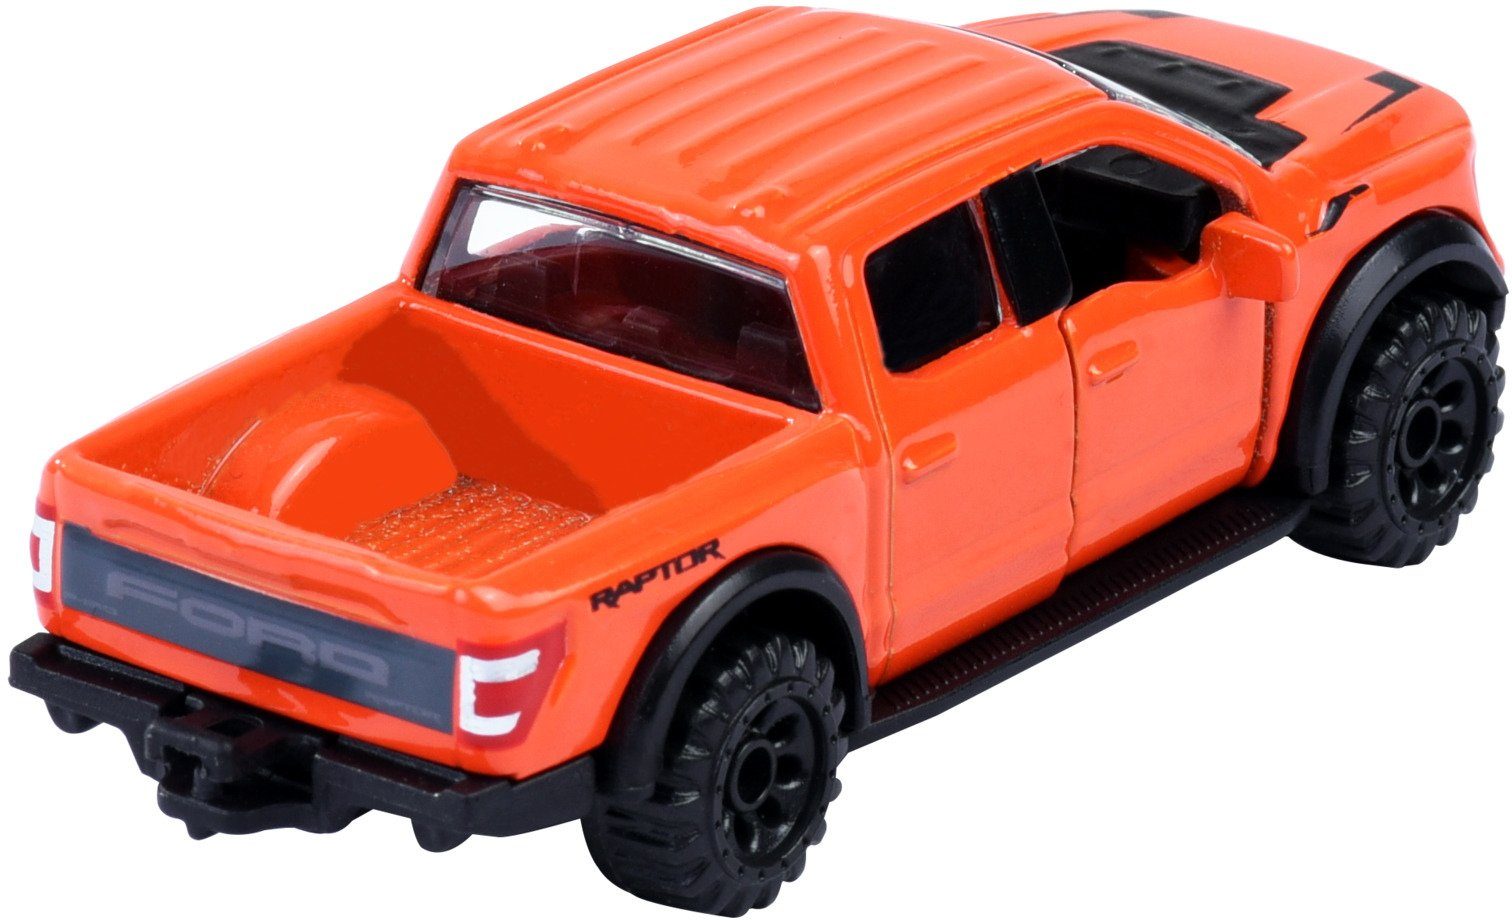 majORETTE Spielzeug-Auto Premium Ford Cars Spielzeugauto orange 212053052Q39 Raptor F-150